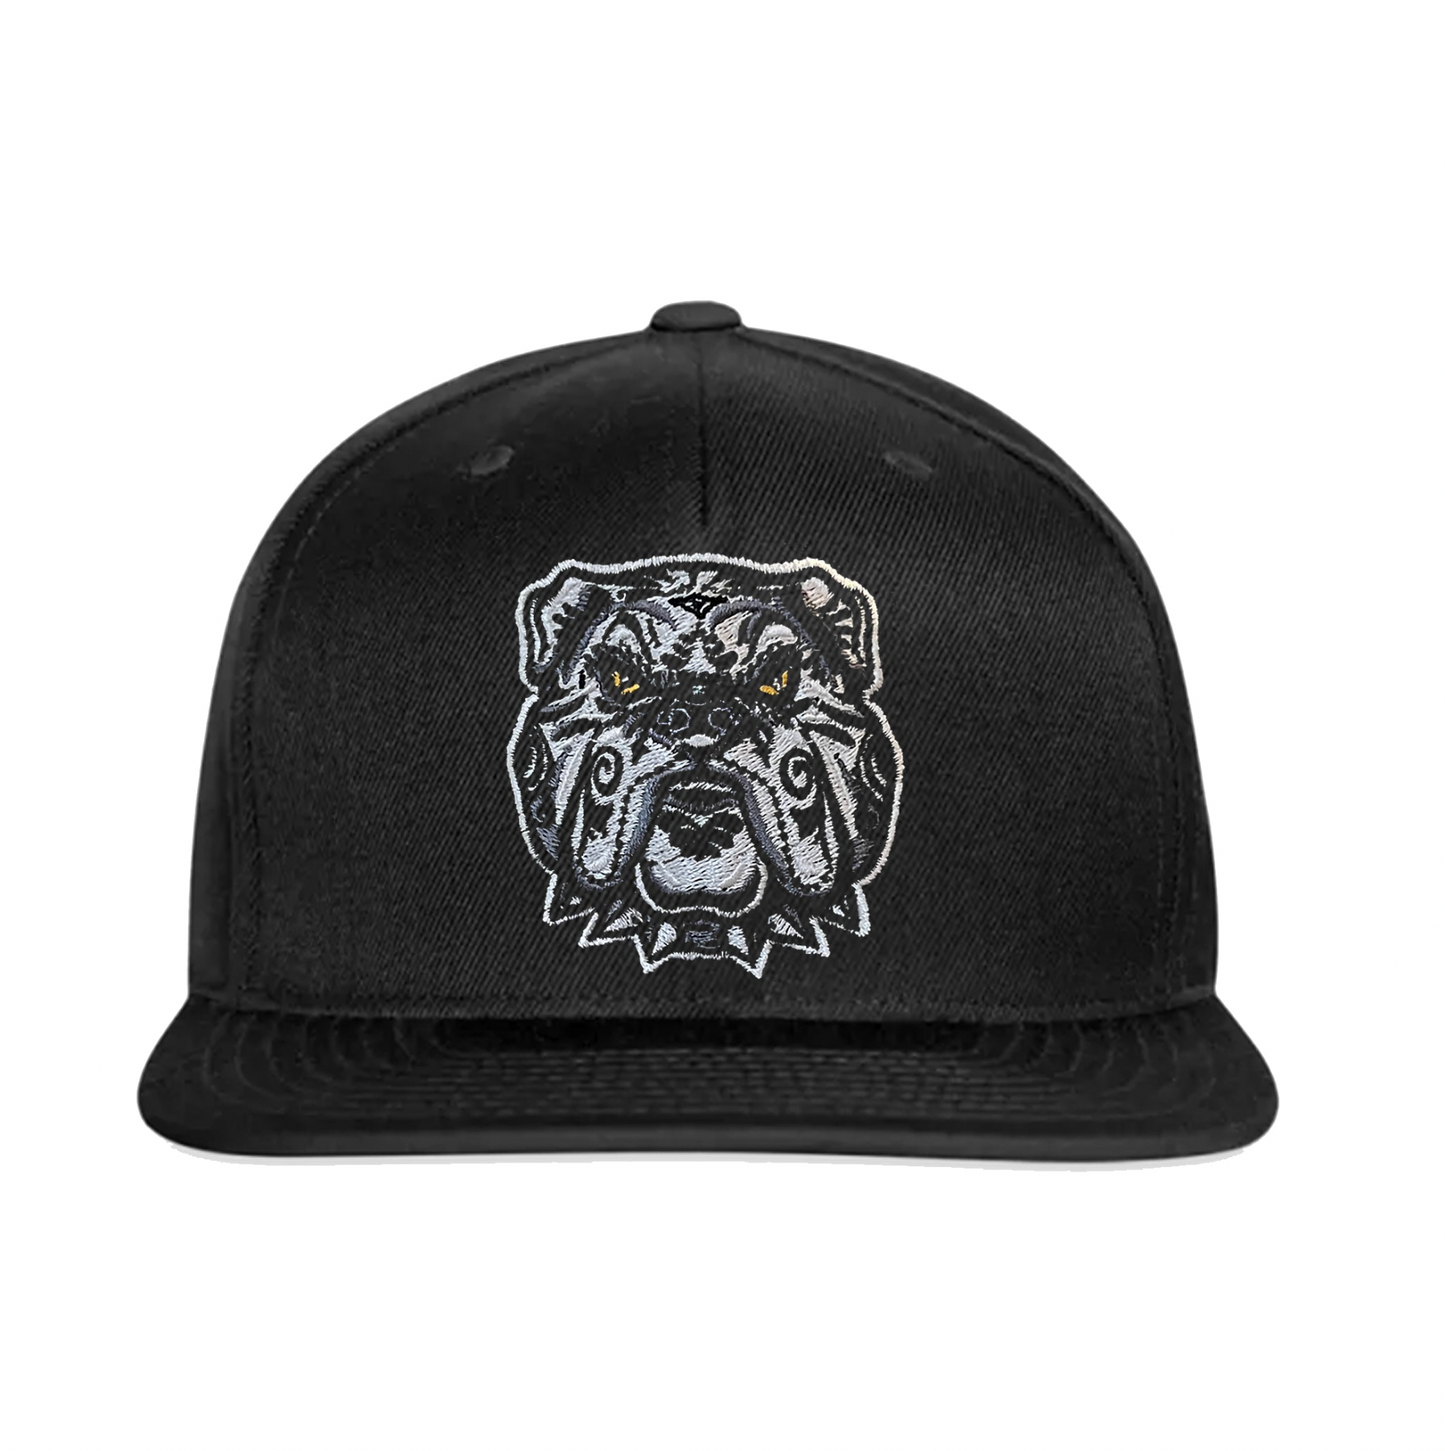 Mascota Tequila Black Snapback Hat